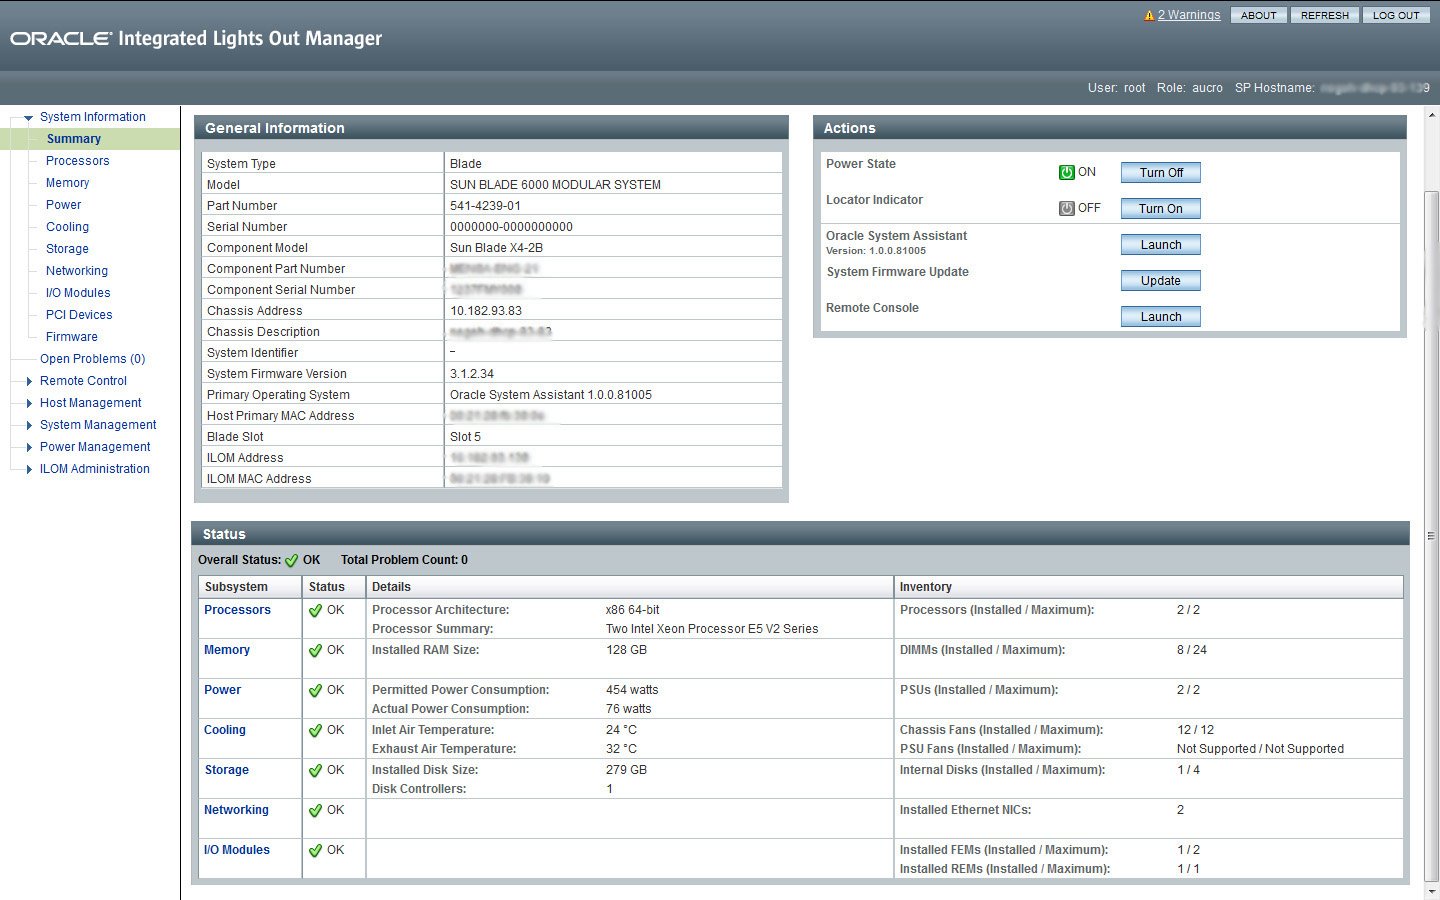 image:Oracle ILOM Summary 화면을 보여 주는 화면 캡처입니다.